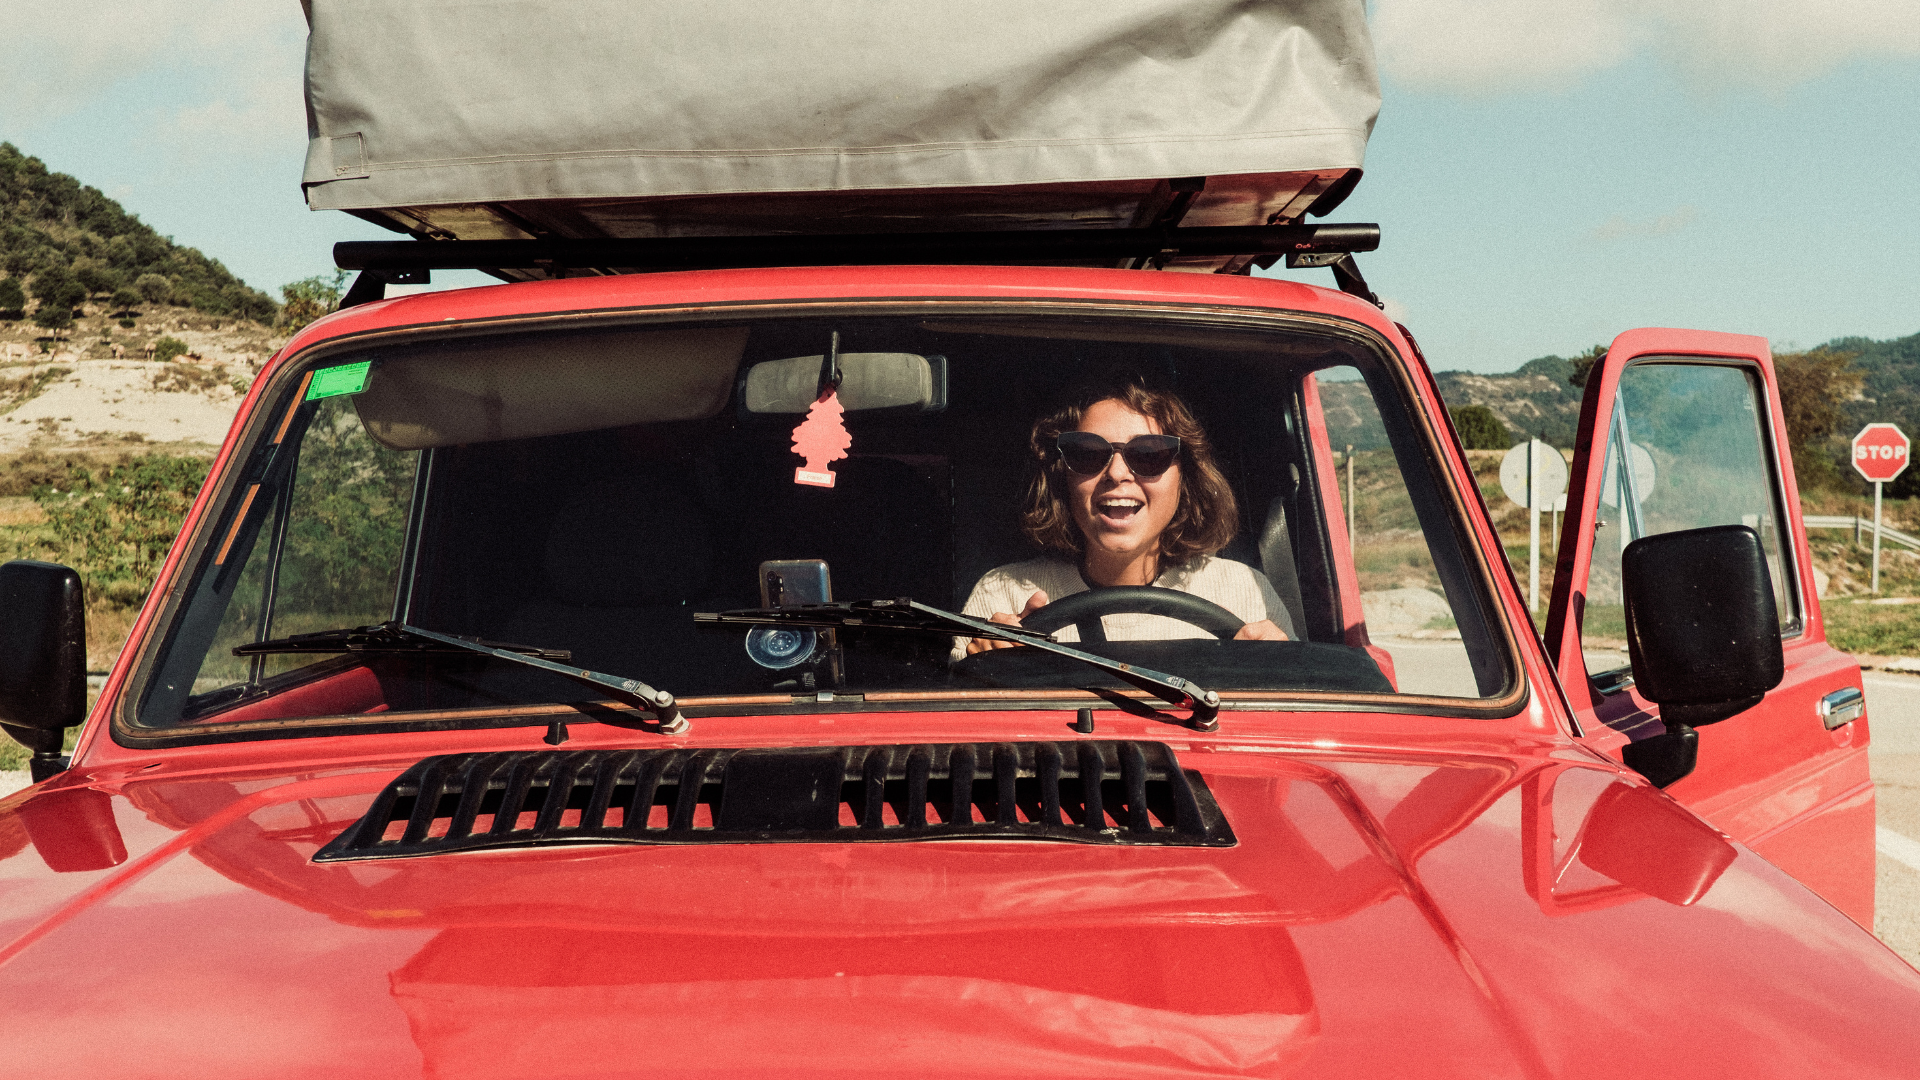 Woman driving truck camper